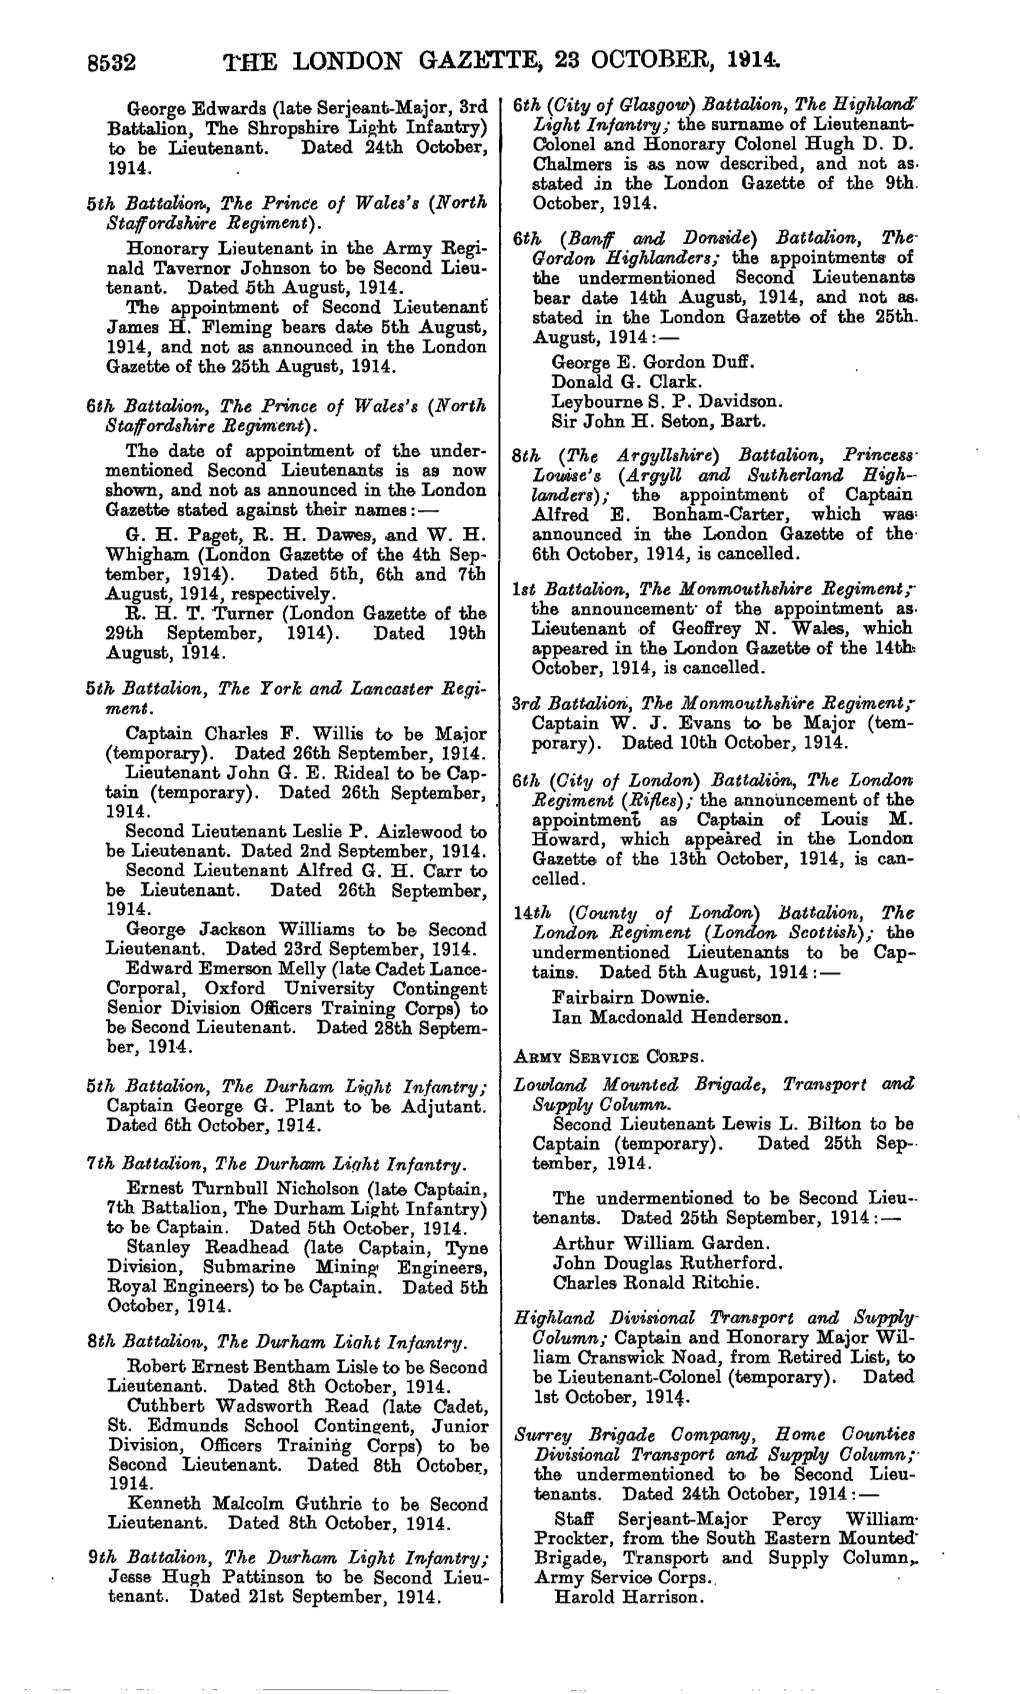 8532 the London Gazette* 23 October, 1914